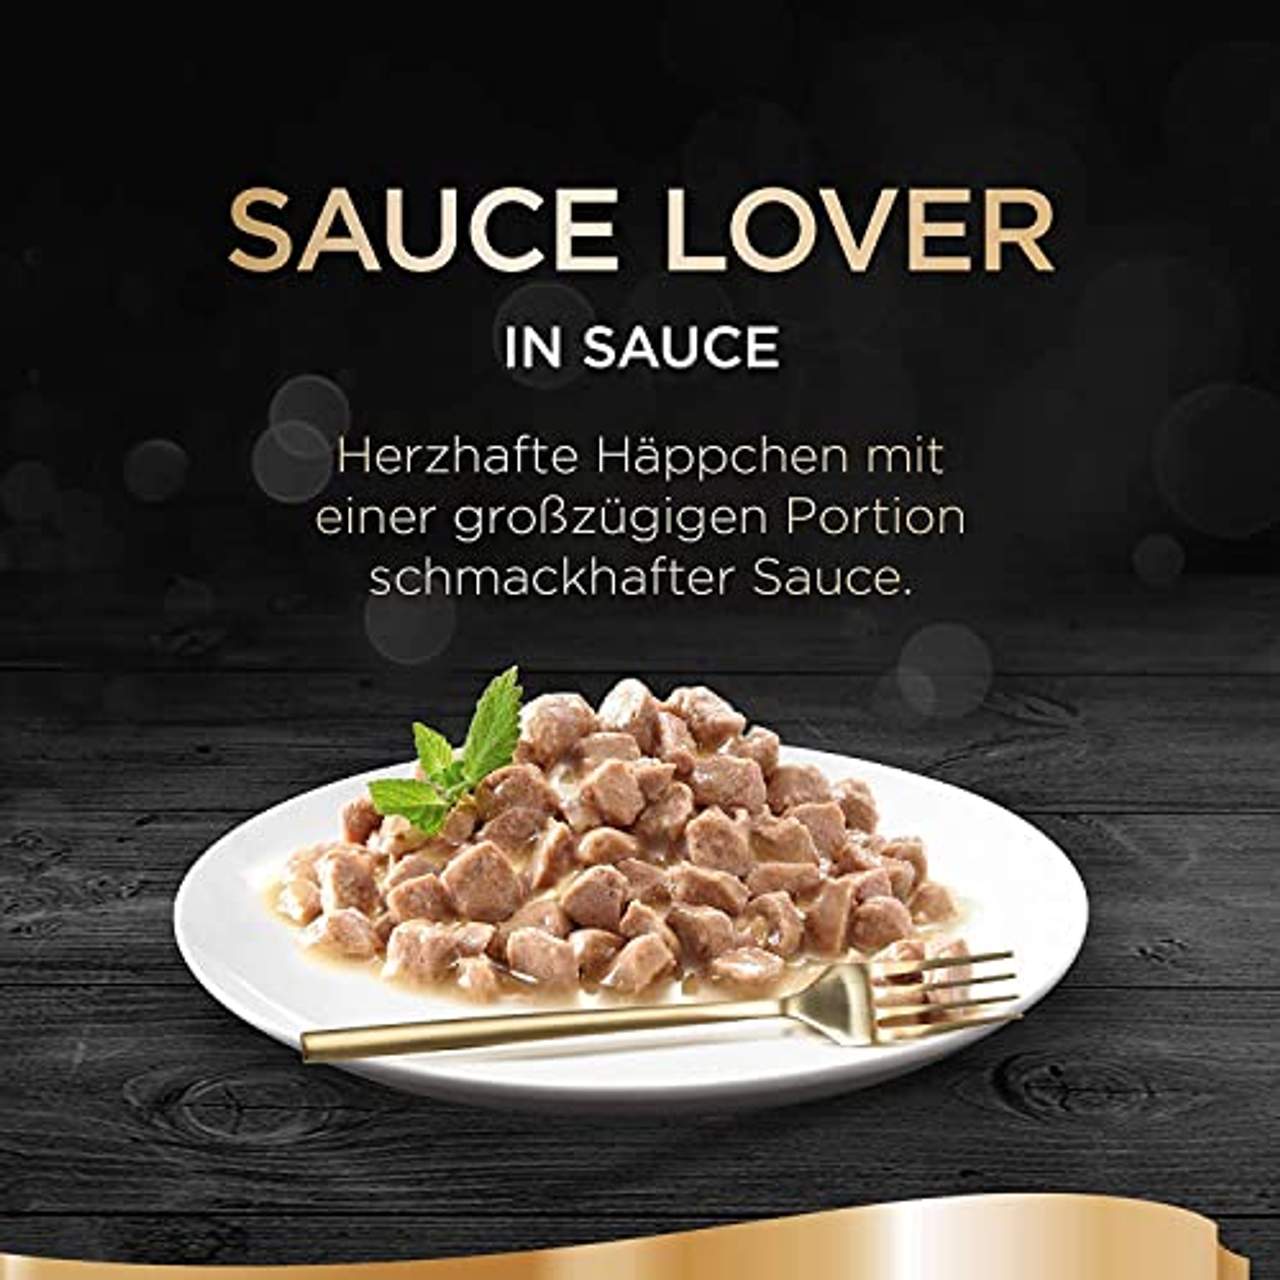 Sheba Sauce Lover Feine Häppchen in Sauce